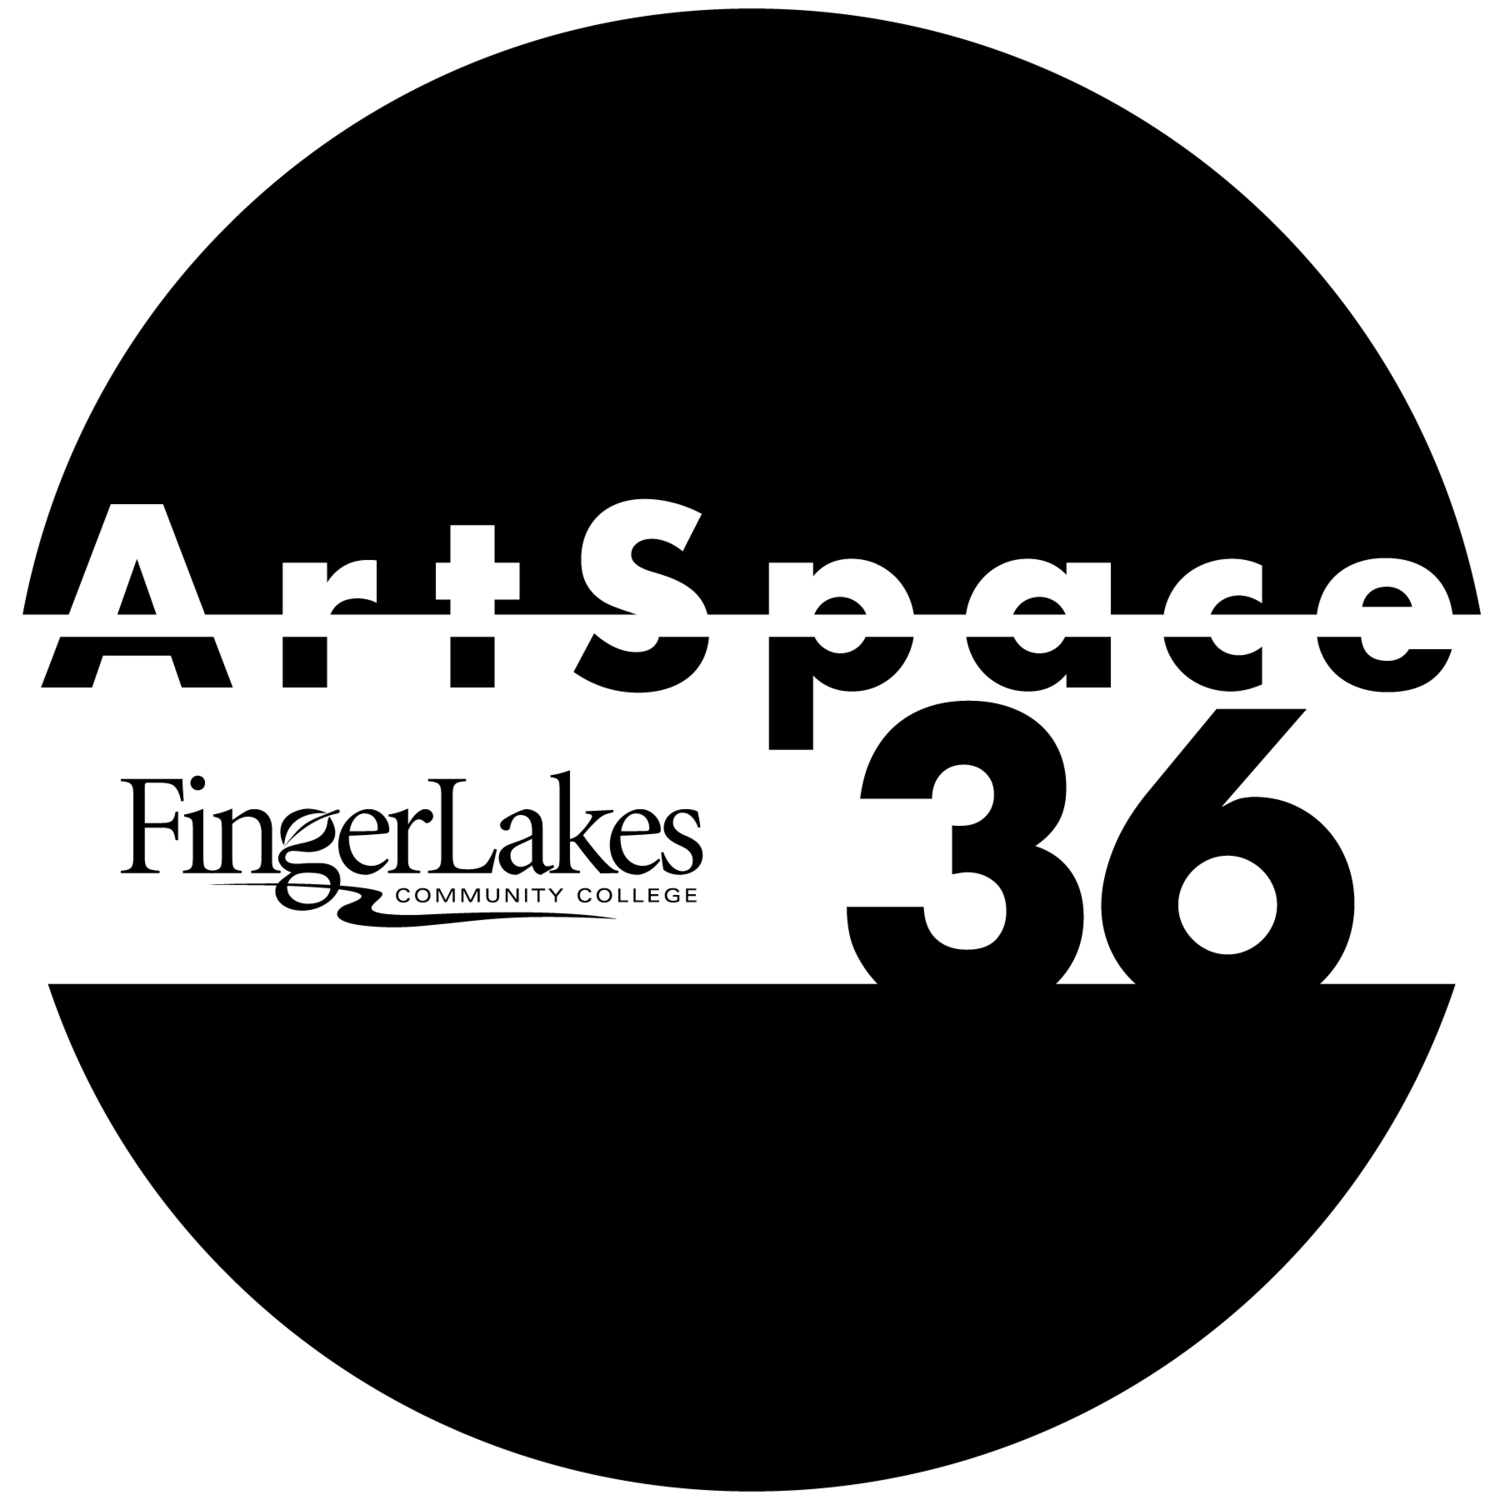 ArtSpace36